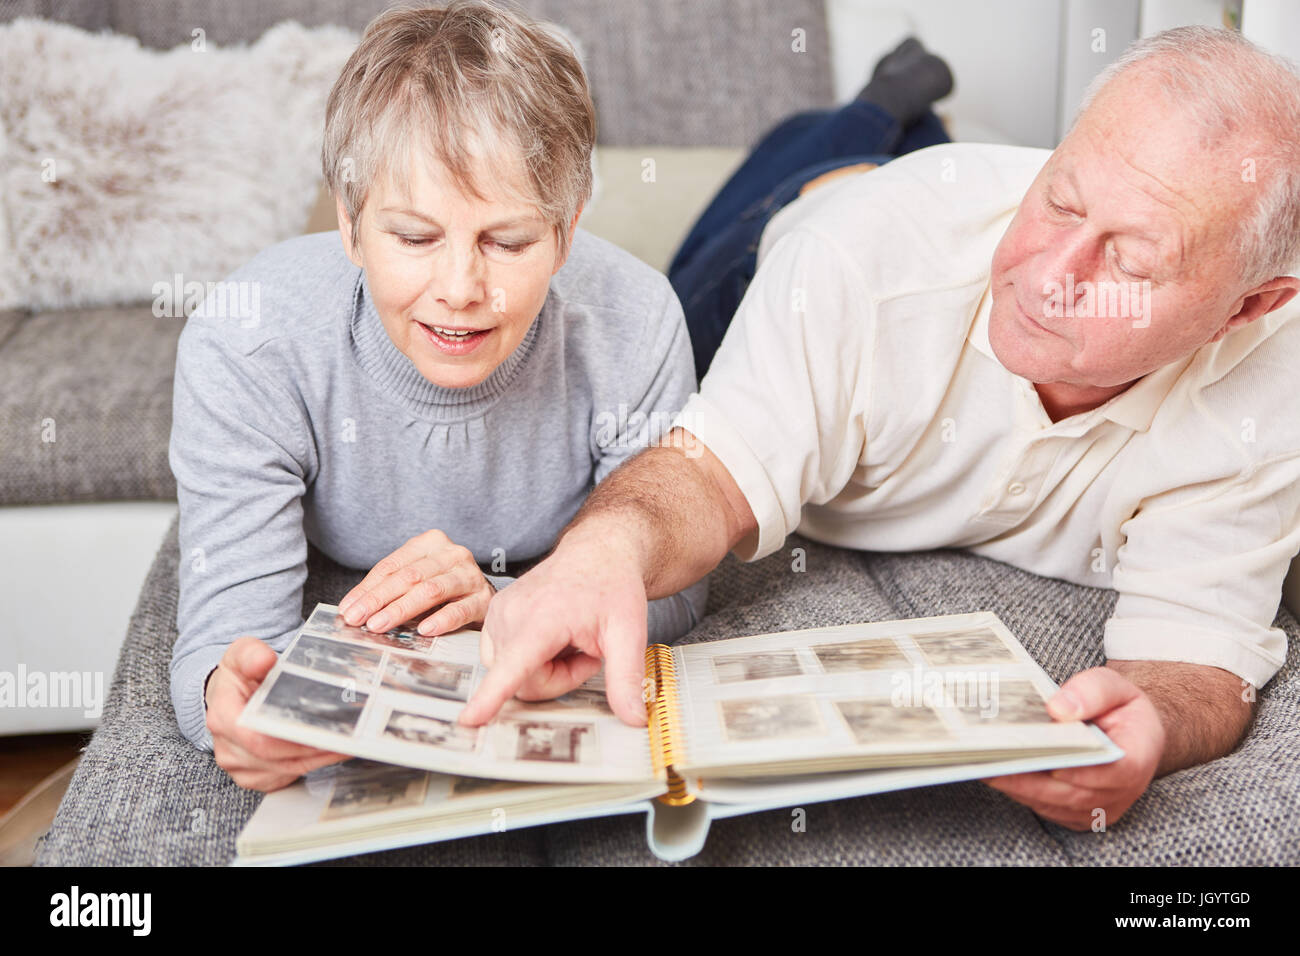 Senior couple in relaxation holding photo album Stock Photo